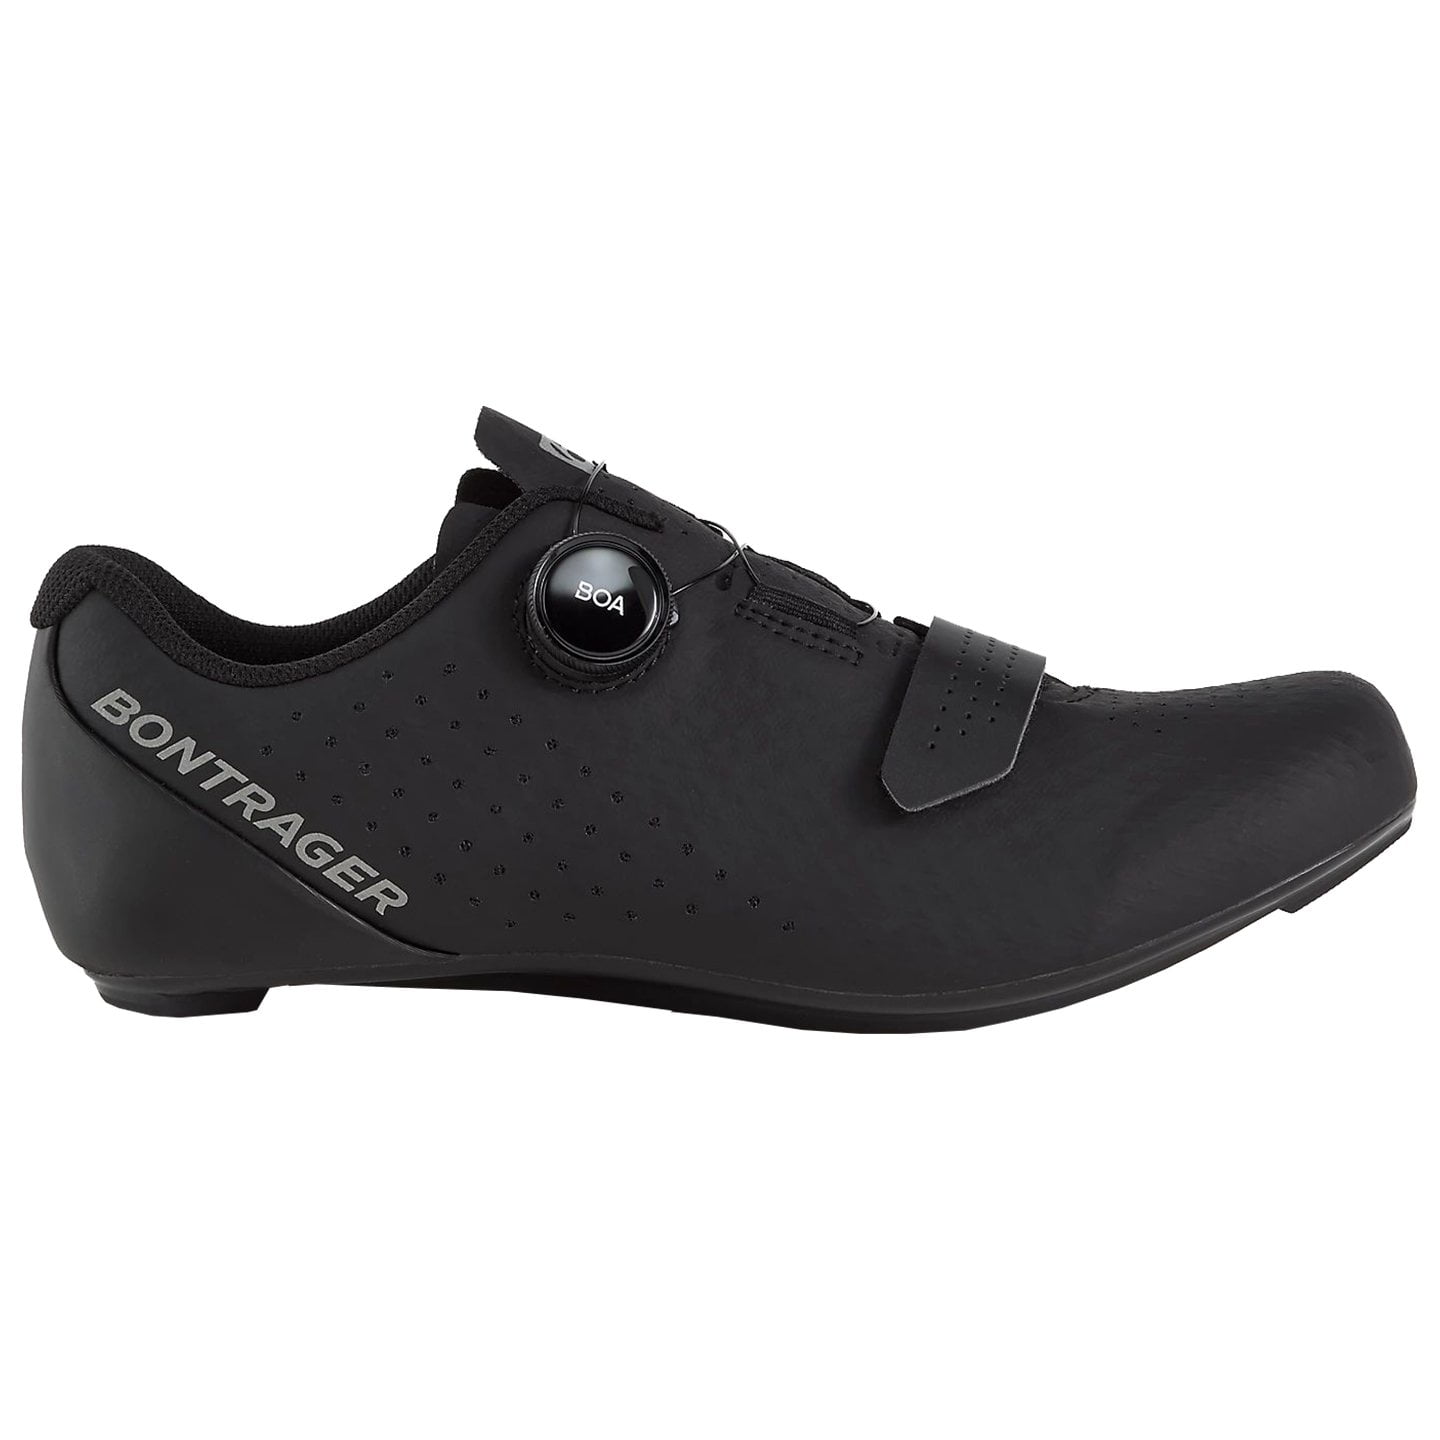 BONTRAGER Circuit Road Bike Shoes Road Shoes, for men, size 42, Cycling shoes